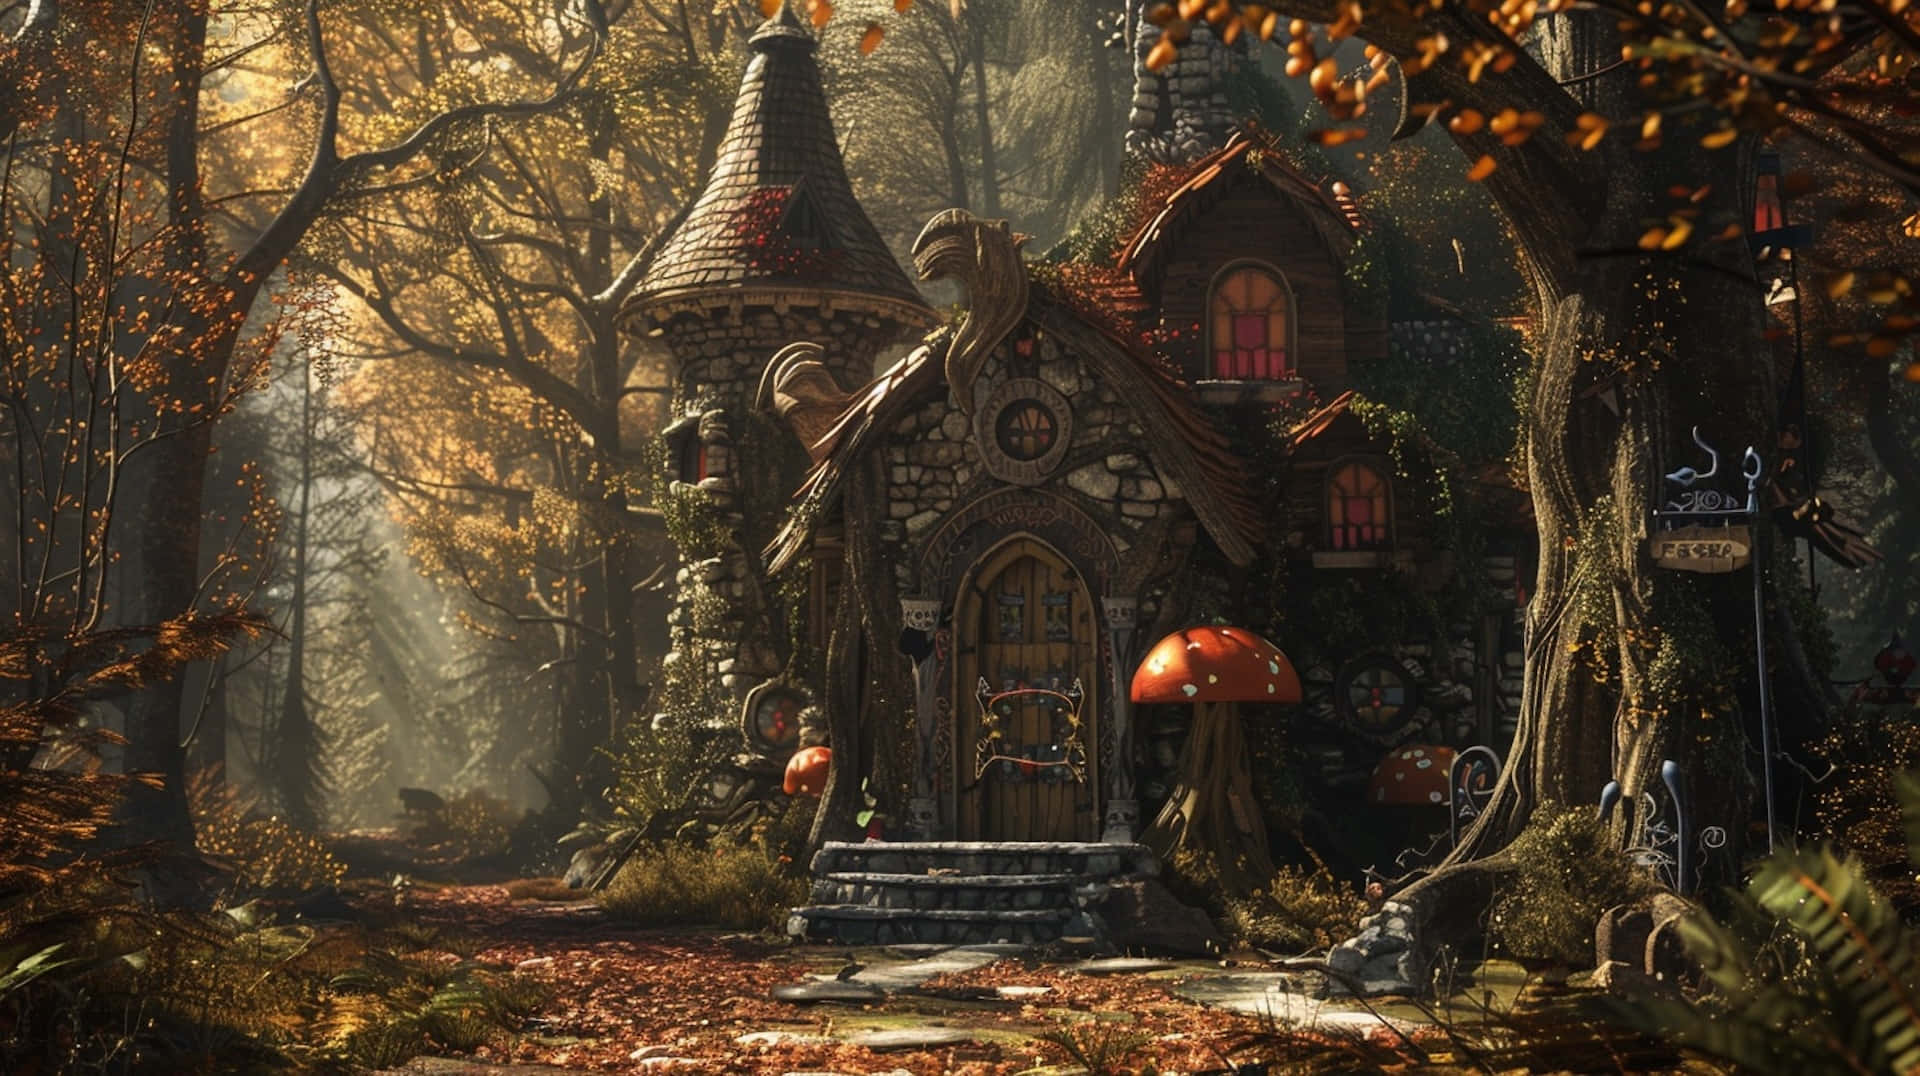 Enchanted Goblincore Forest Cottage.jpg Wallpaper